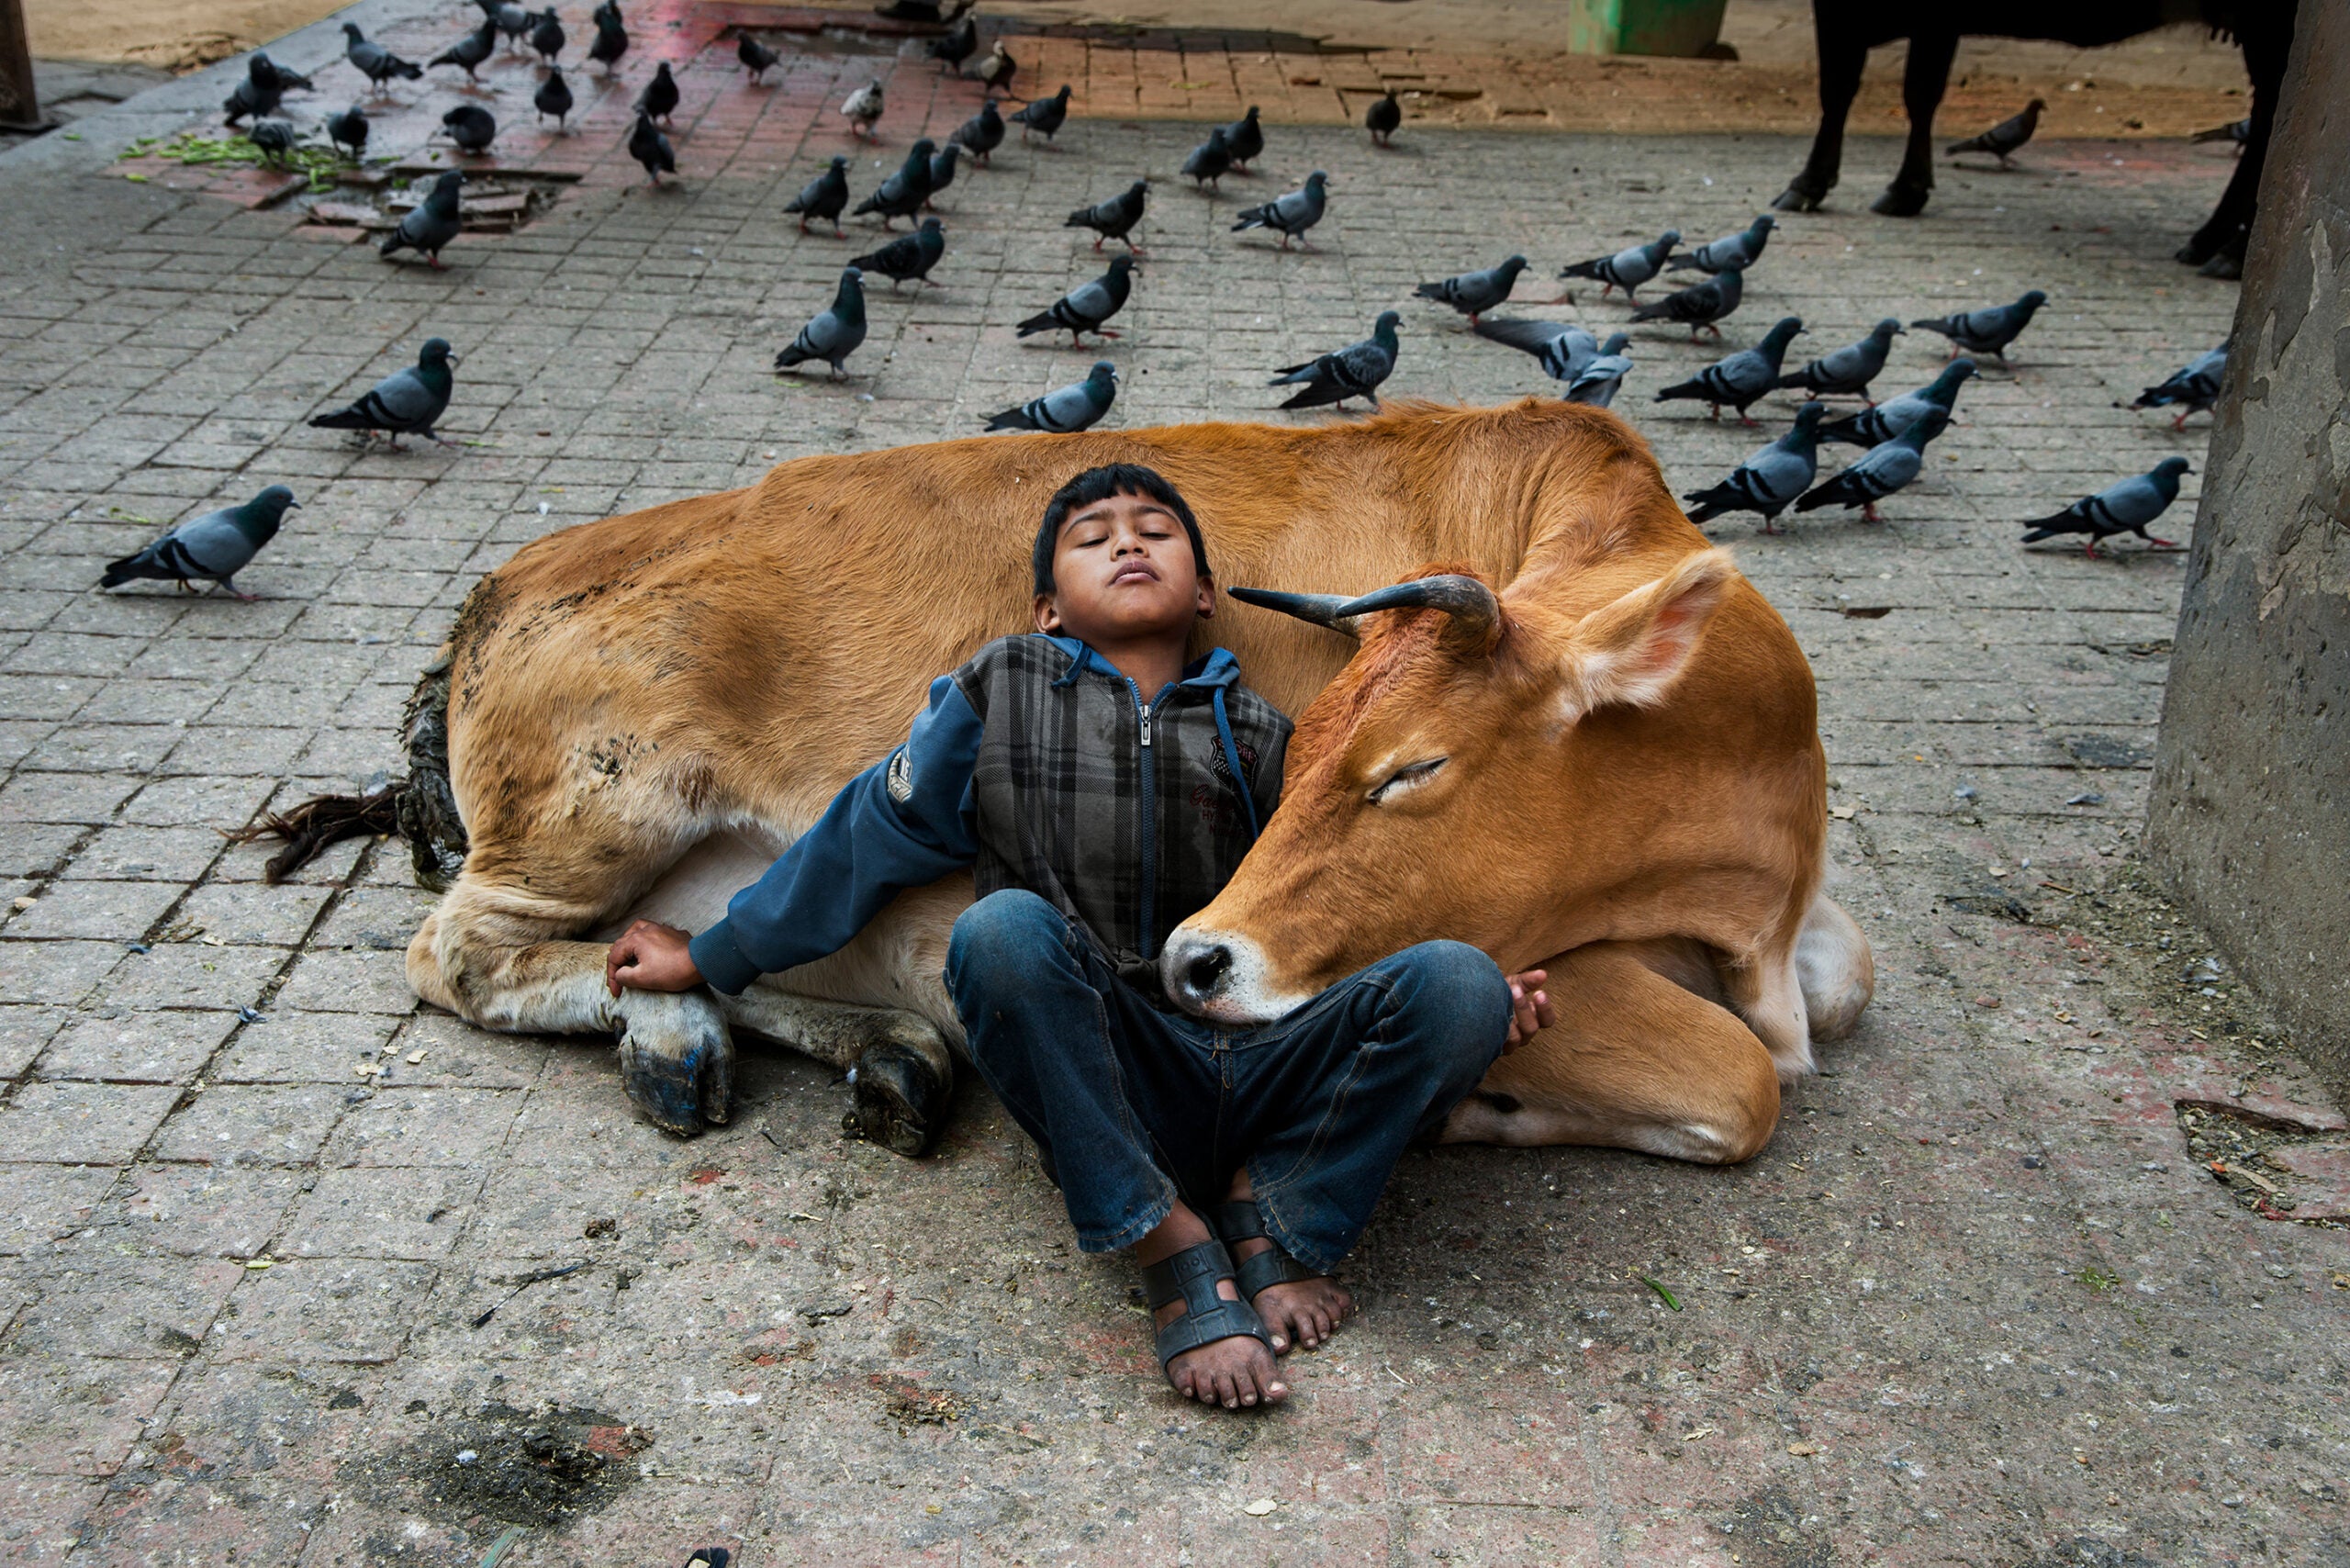 “Cow and boy rest together near Durbar Square,” Kathmandu, Nepal, 2013.